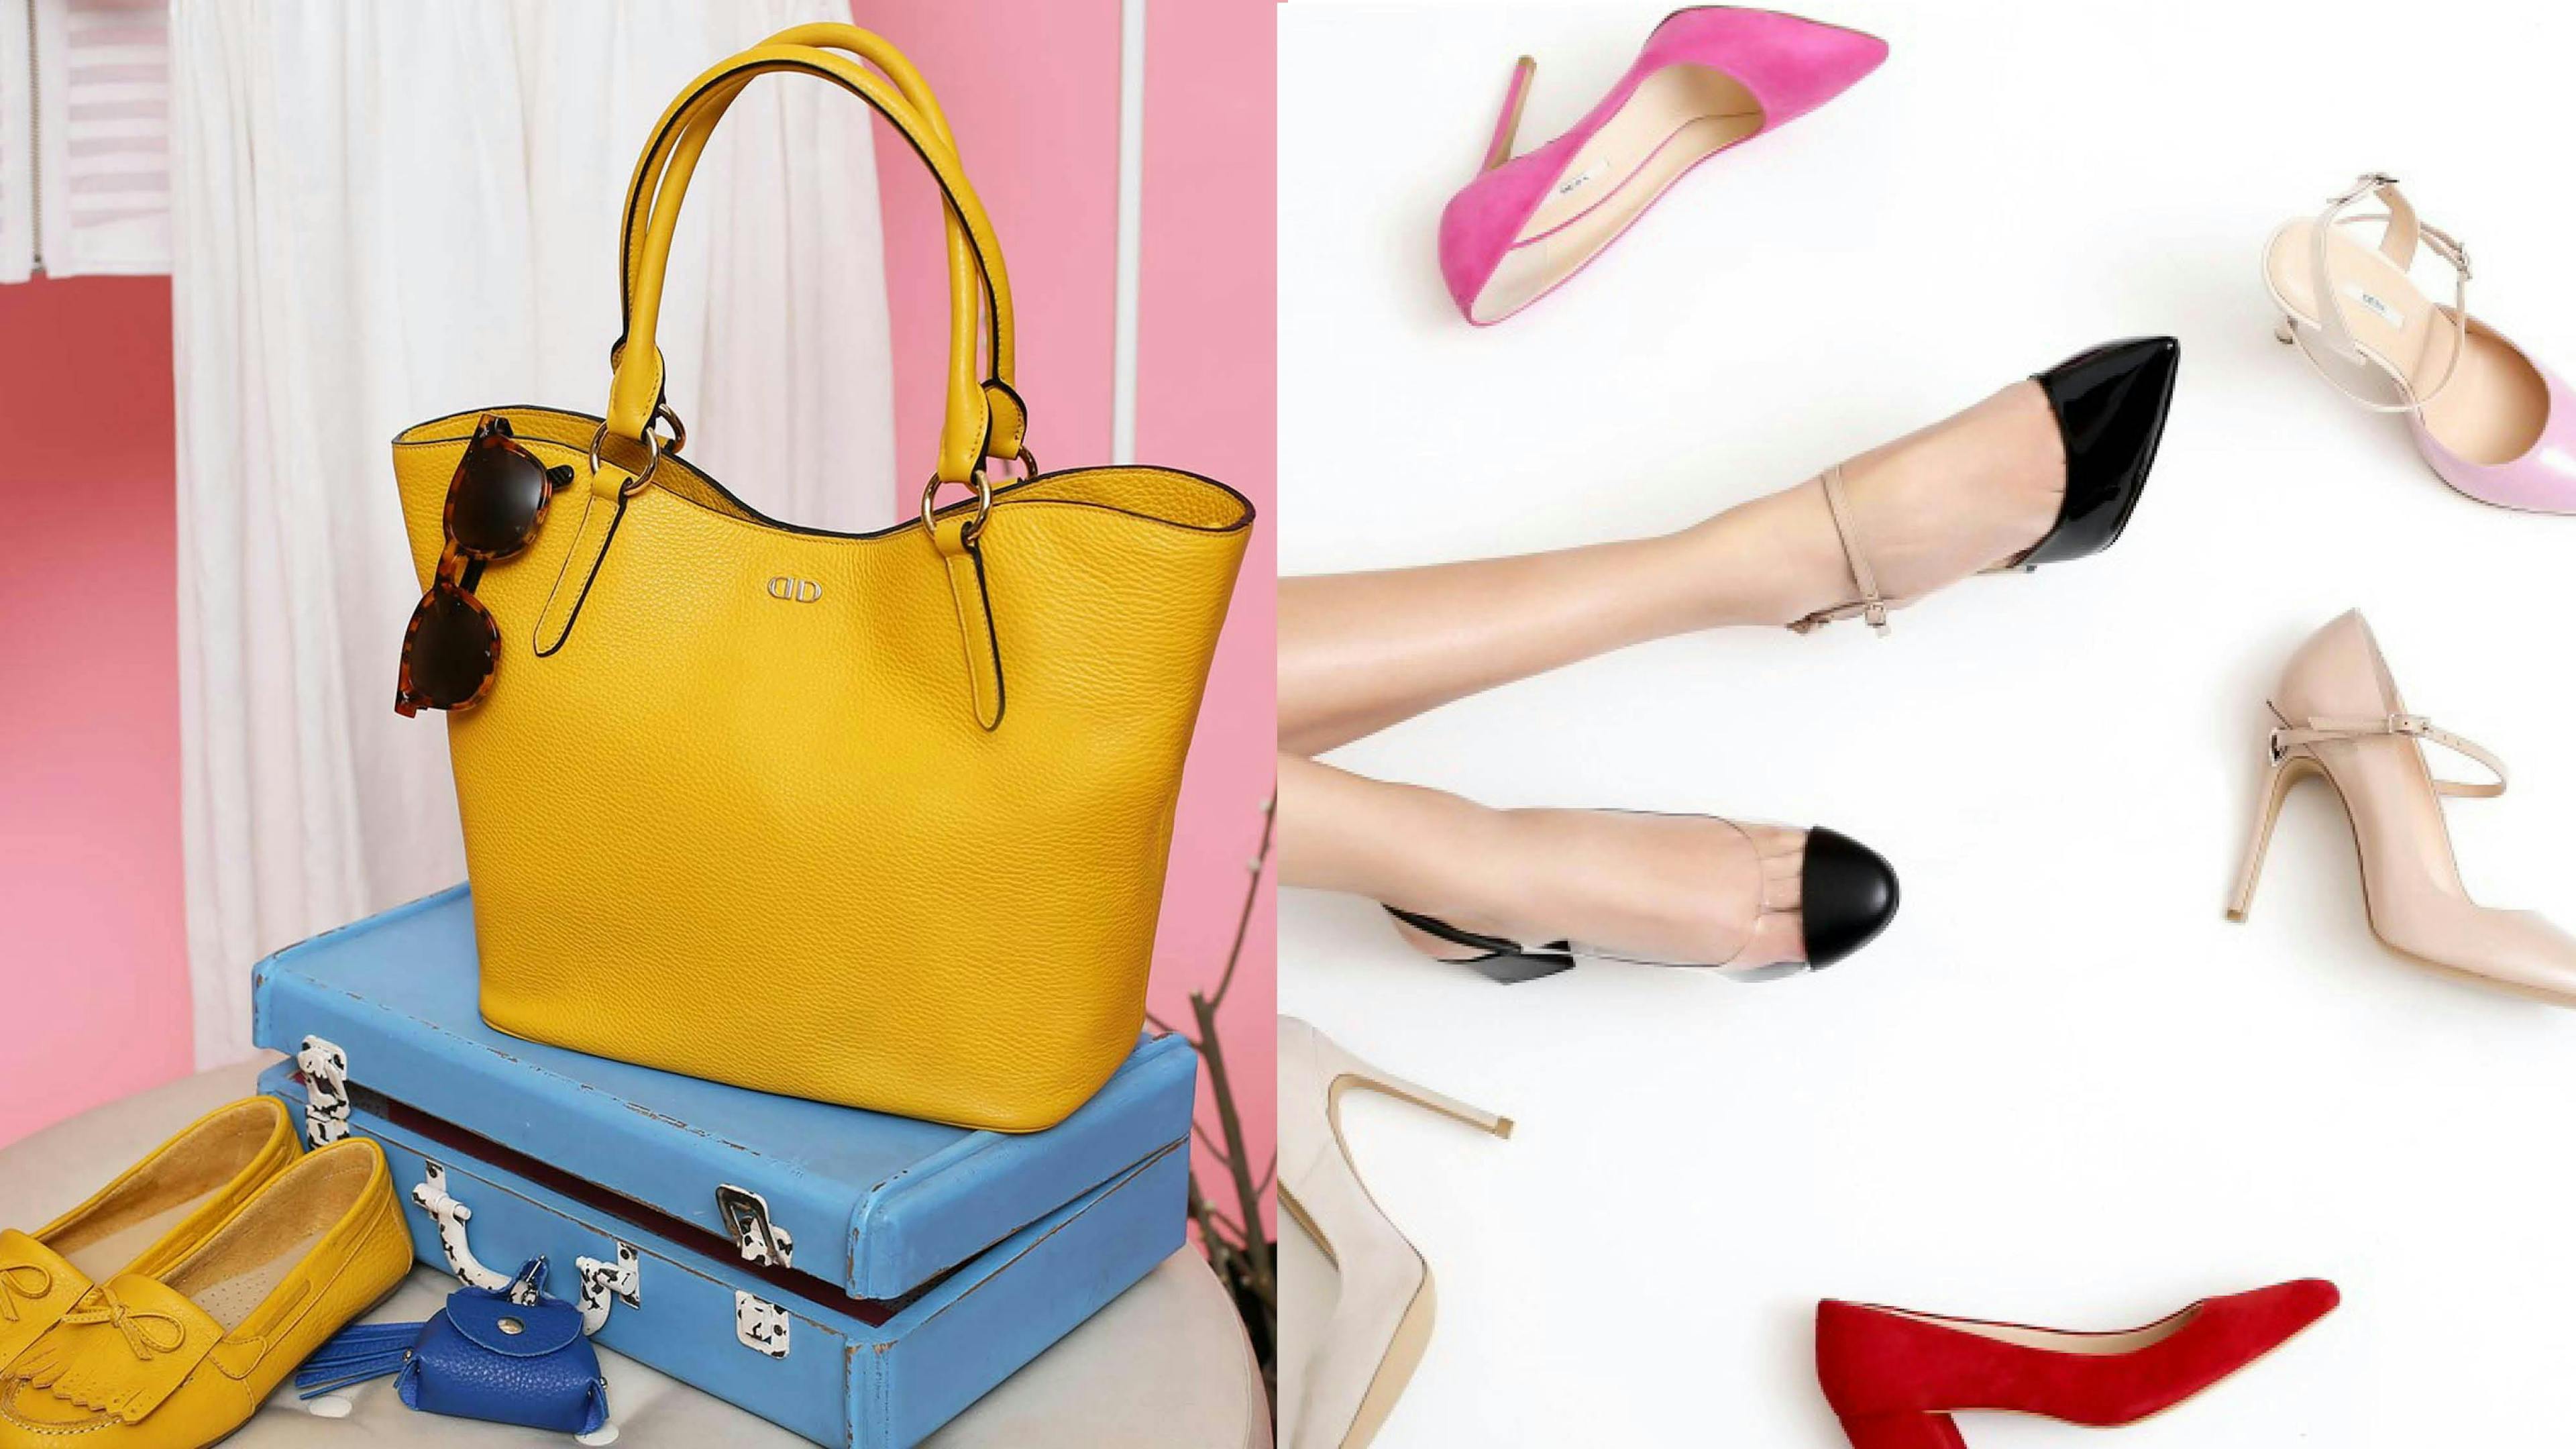 handbag accessories bag accessory clothing apparel sandal footwear purse